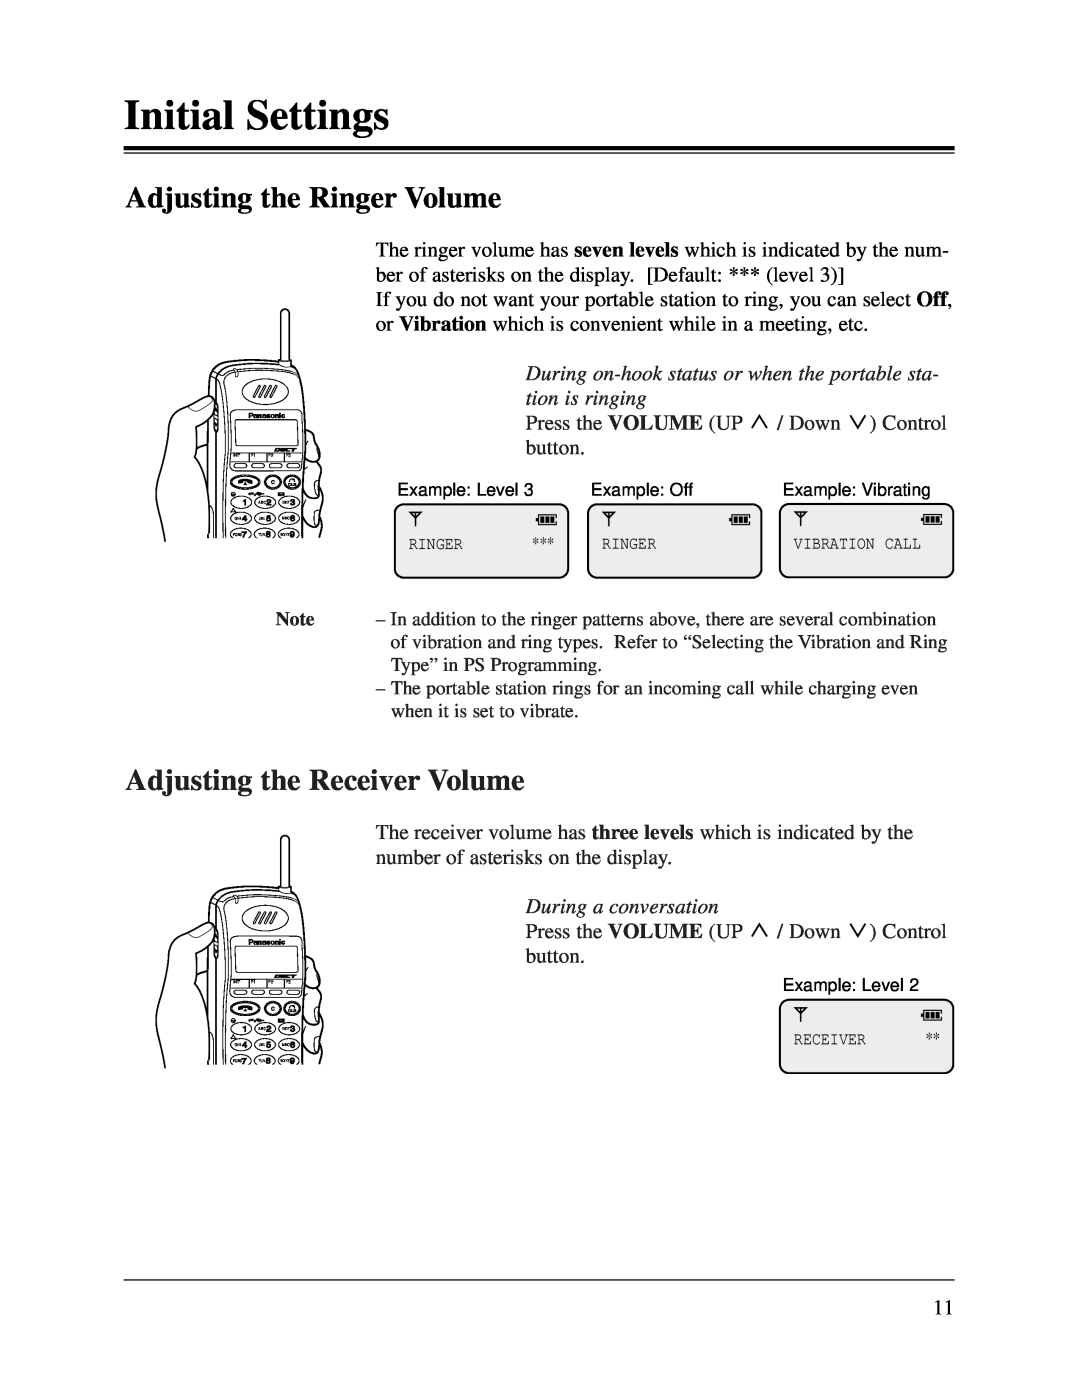 Panasonic KX-TD816CE Adjusting the Ringer Volume, Adjusting the Receiver Volume, During a conversation, Initial Settings 